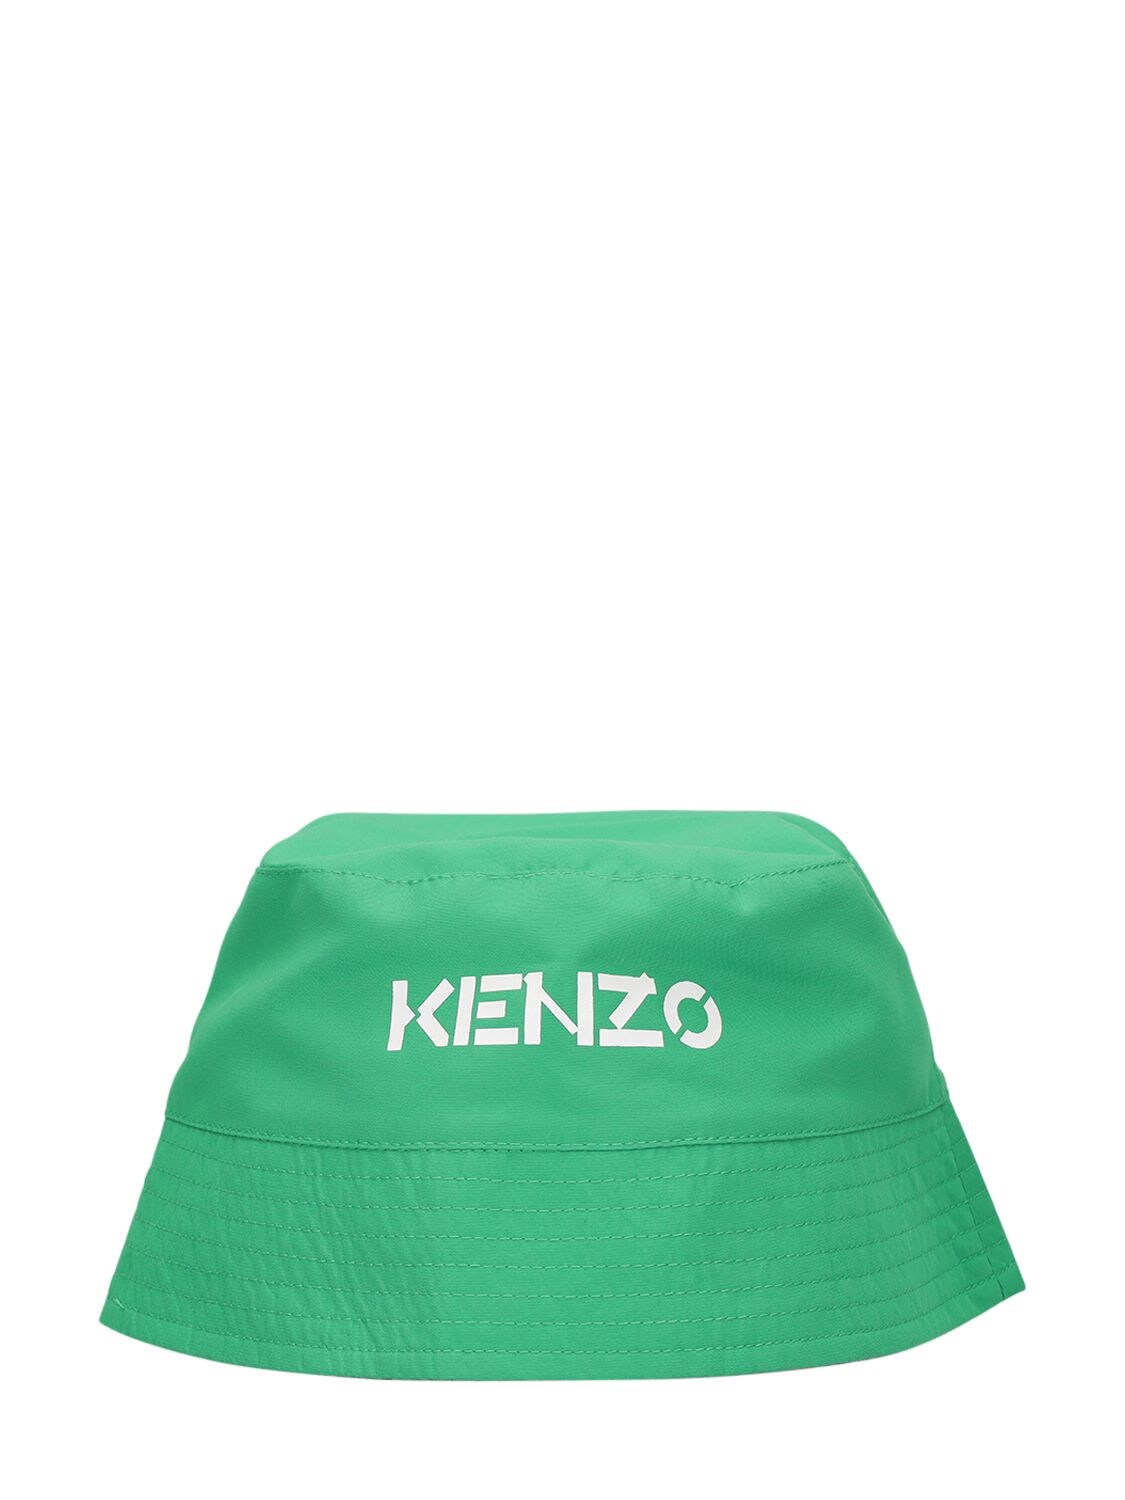 KENZO REVERSIBLE PRINTED BUCKET HAT W/ LOGO